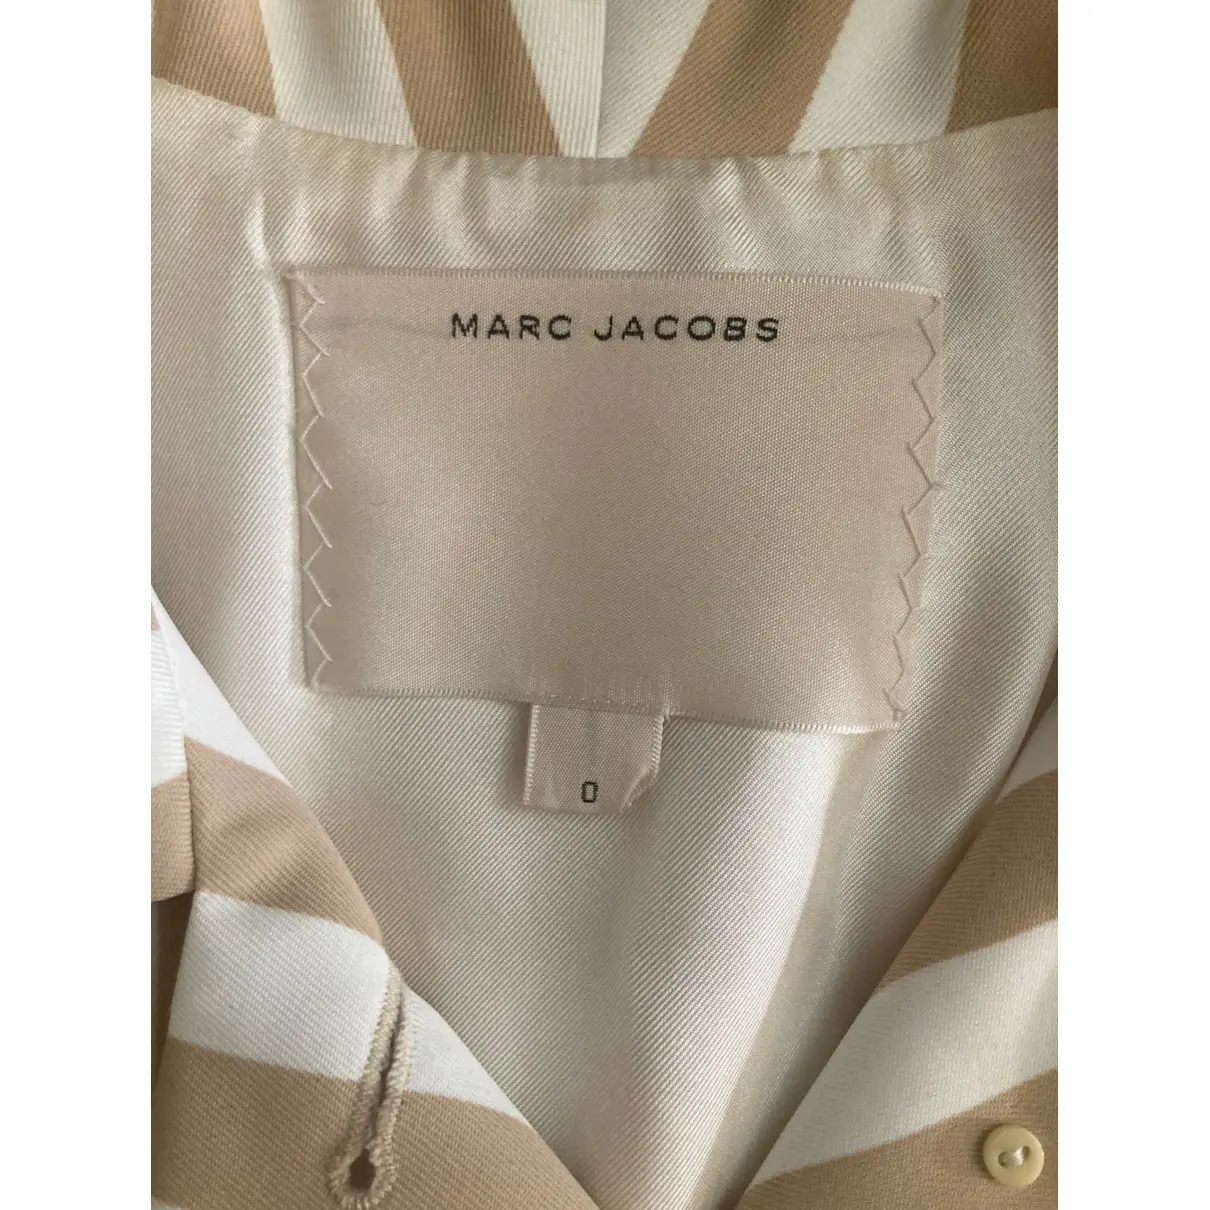 Buy Marc Jacobs Short vest online